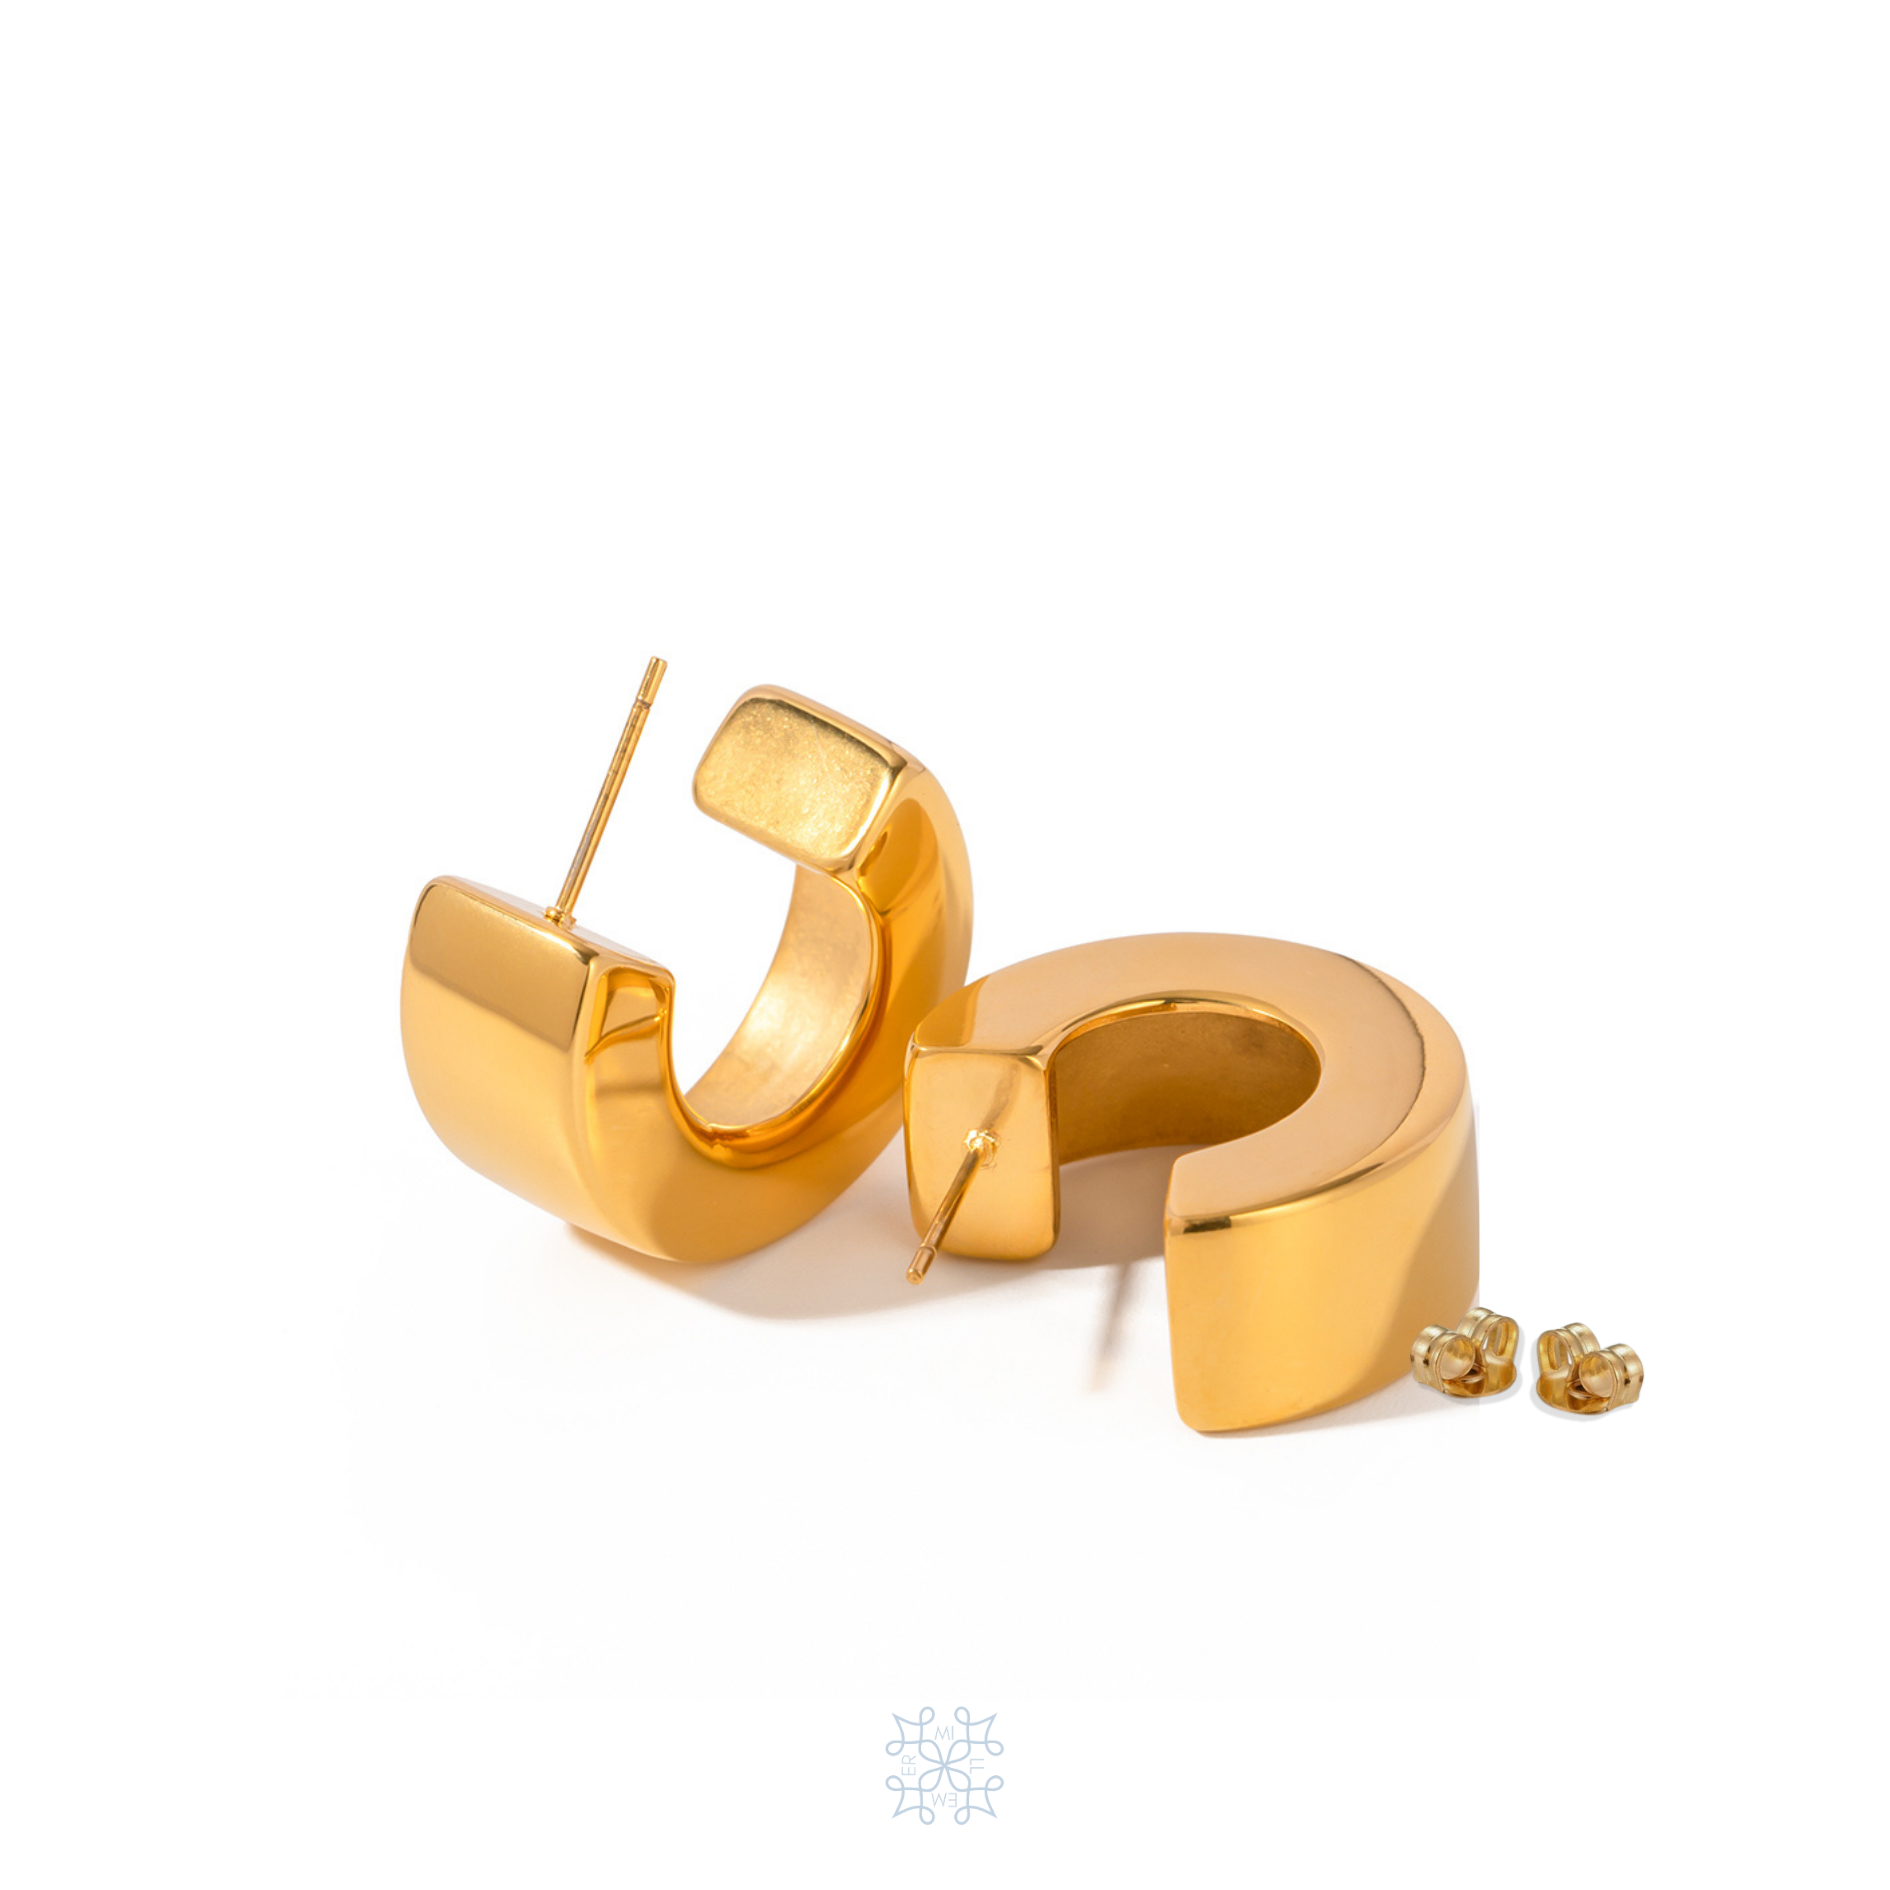 Geometric Gold Hoop Earrings. in the form of a bold geometric hoop.